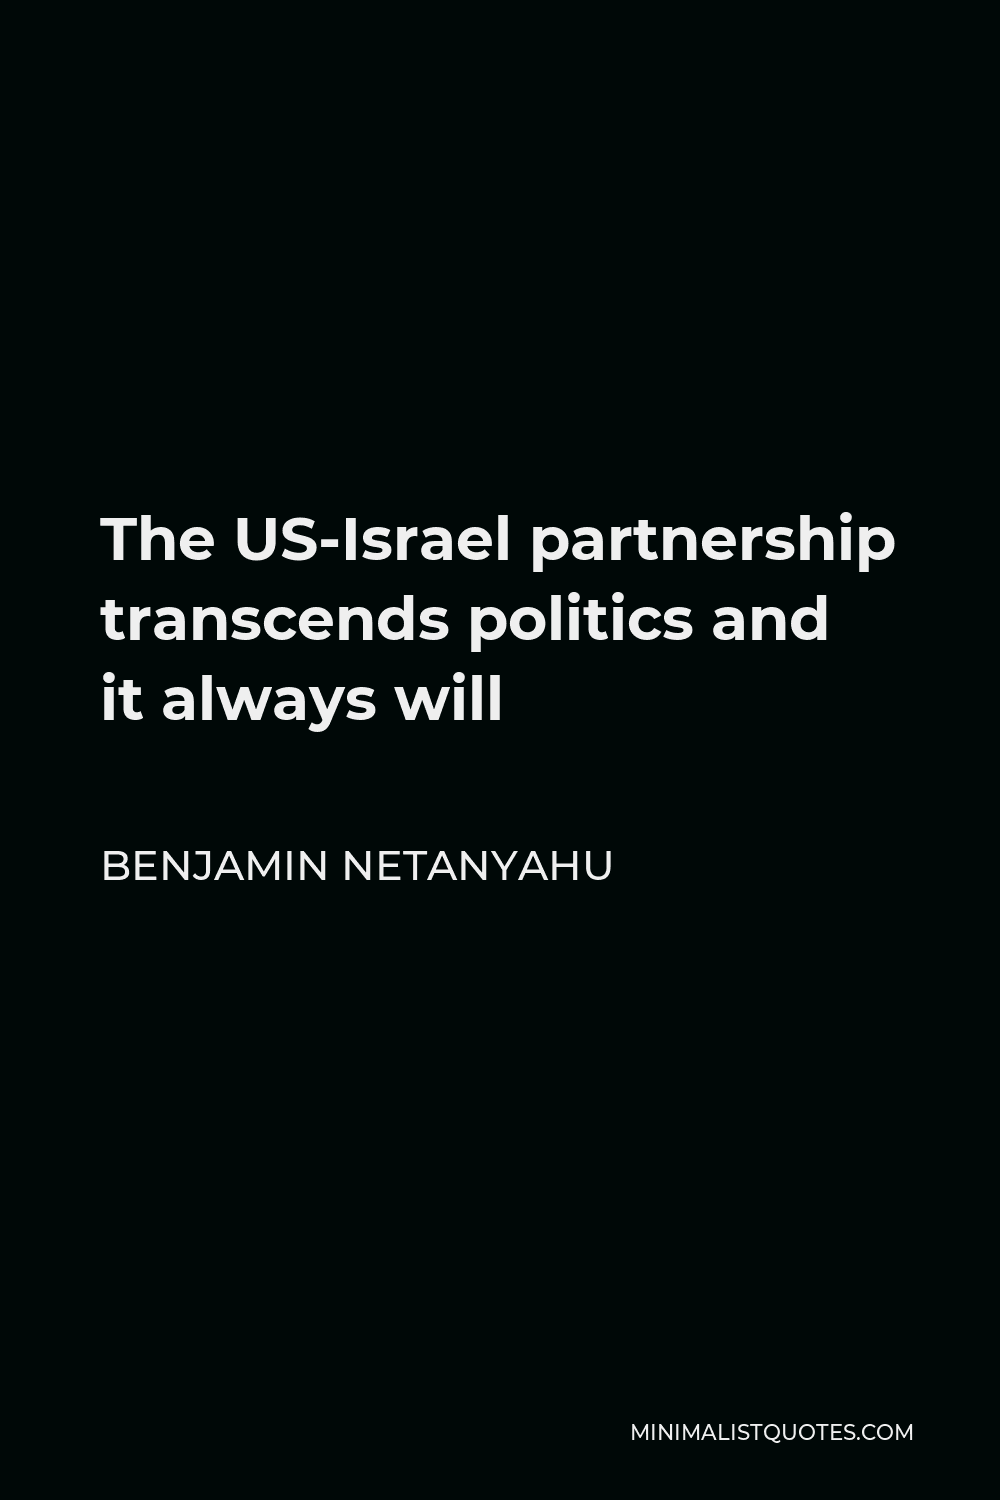 Benjamin Netanyahu Quote - The US-Israel partnership transcends politics and it always will